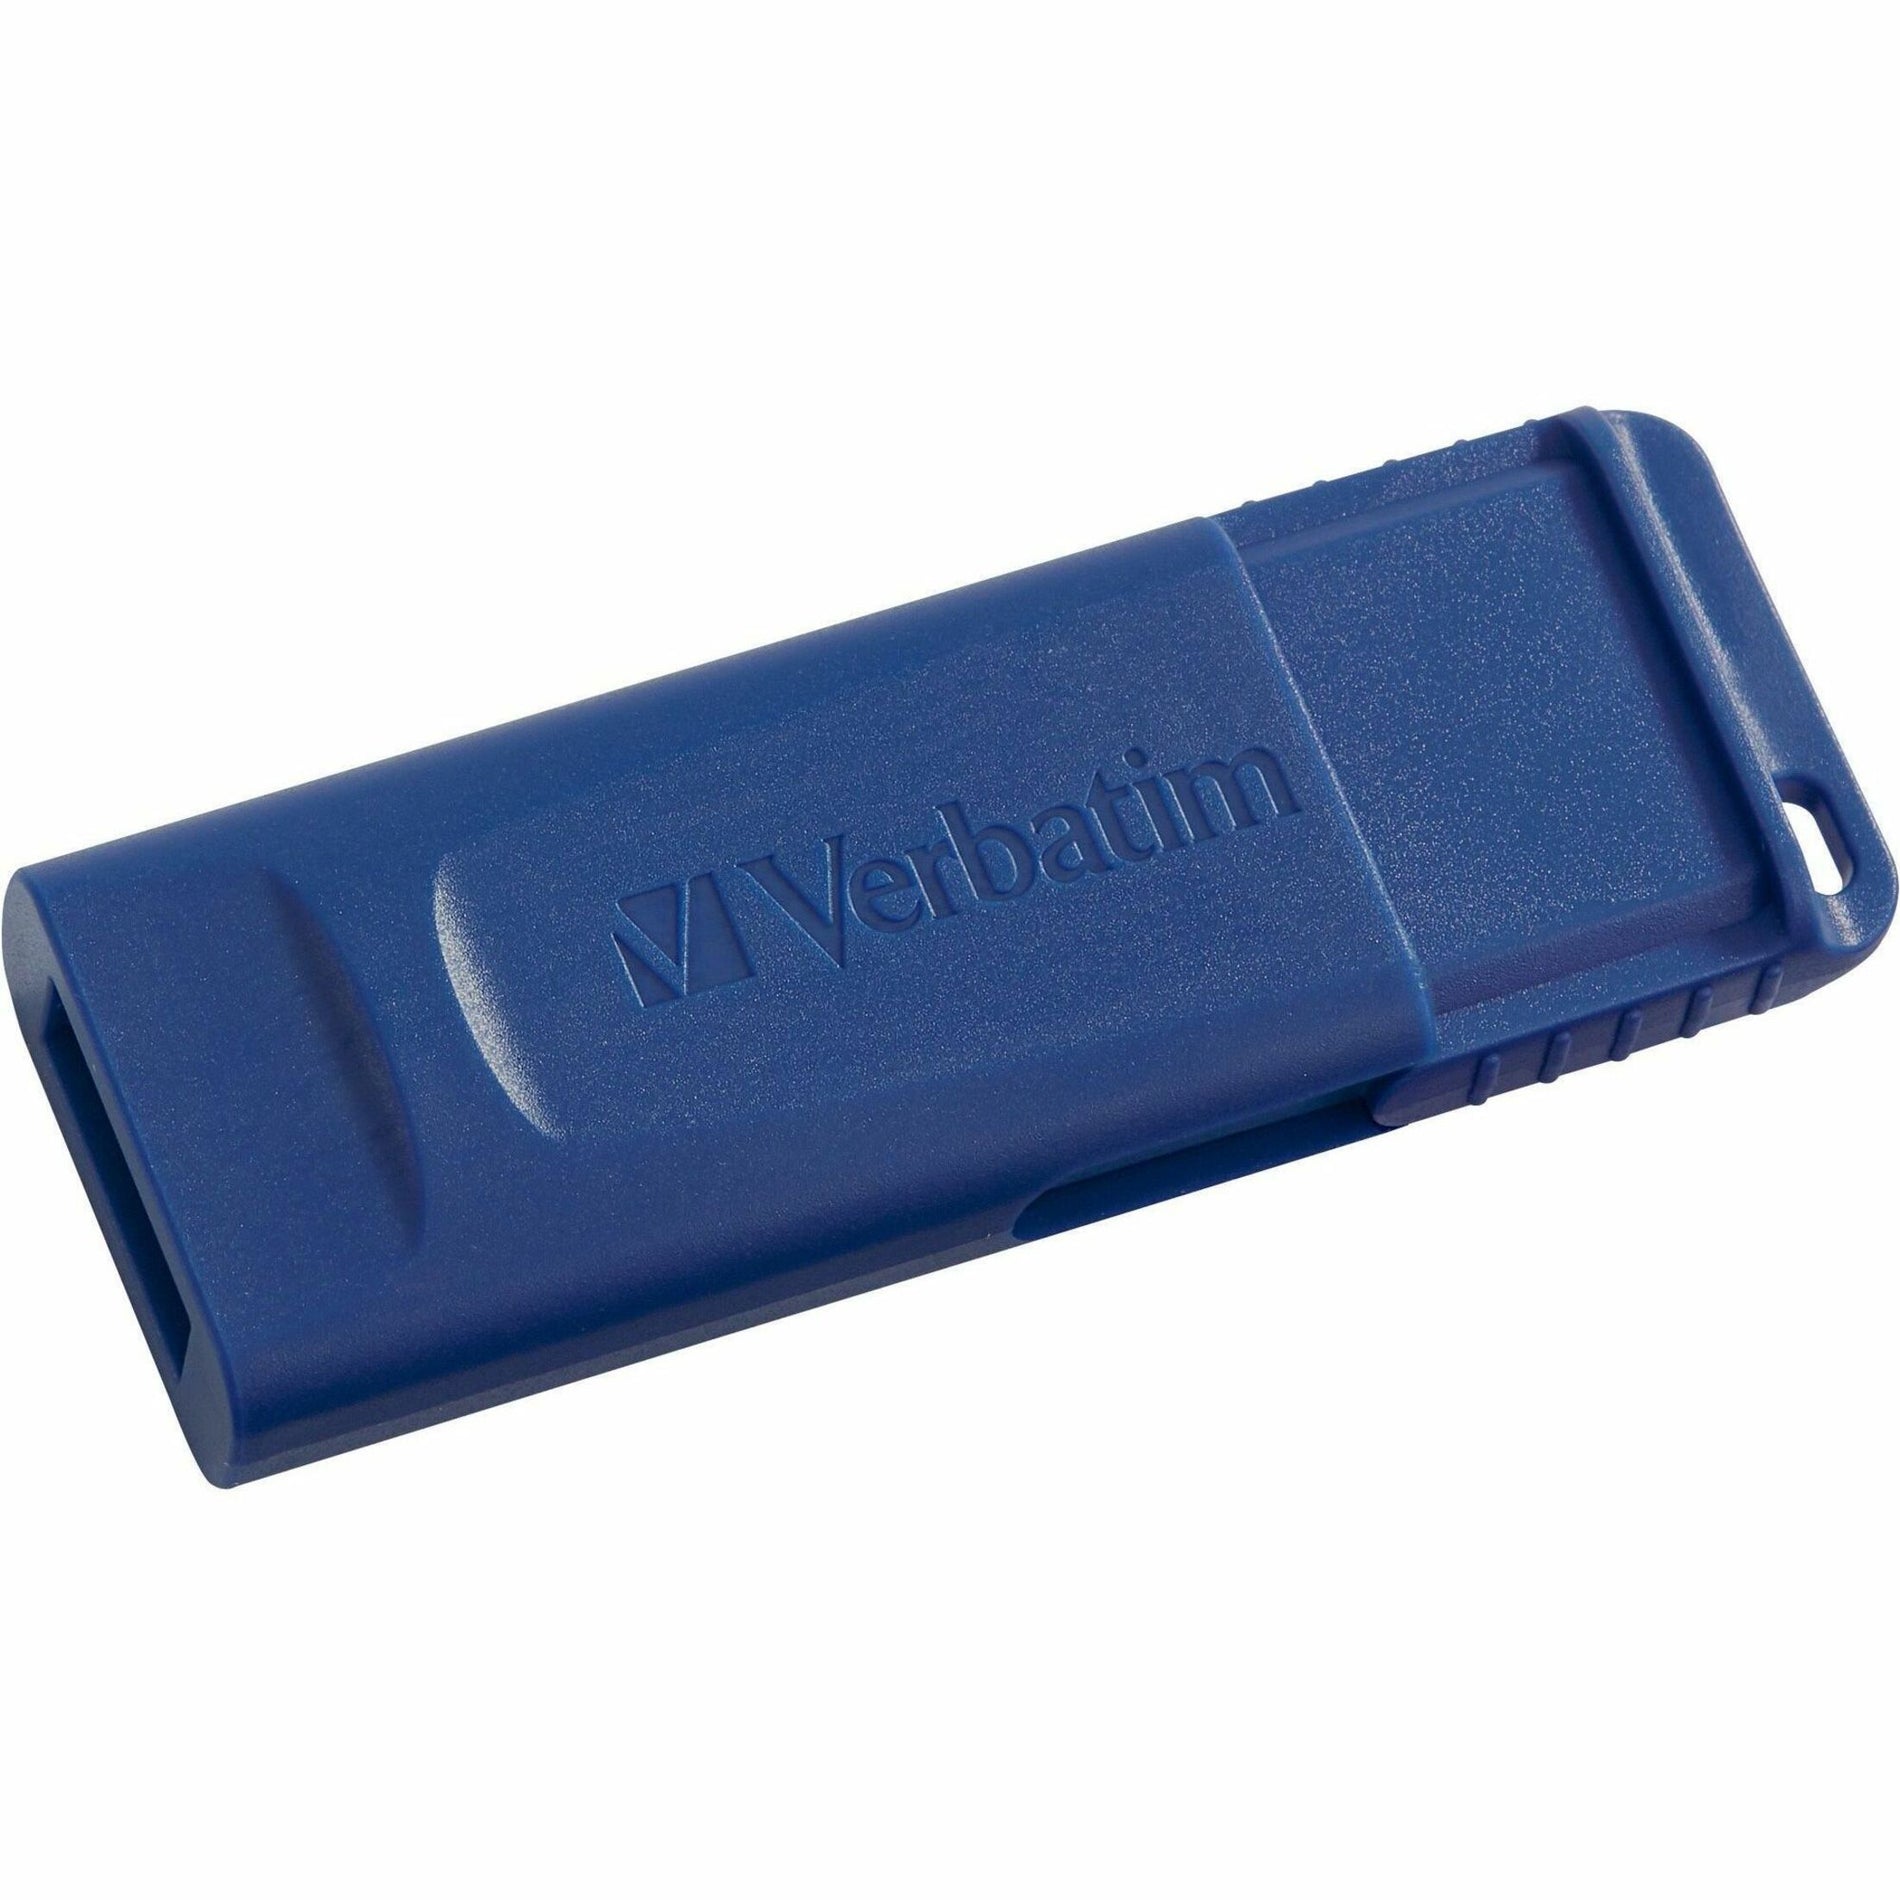 Microban 98659 128GB USB Flash Drive - Blue, Antimicrobial, Retractable, Capless